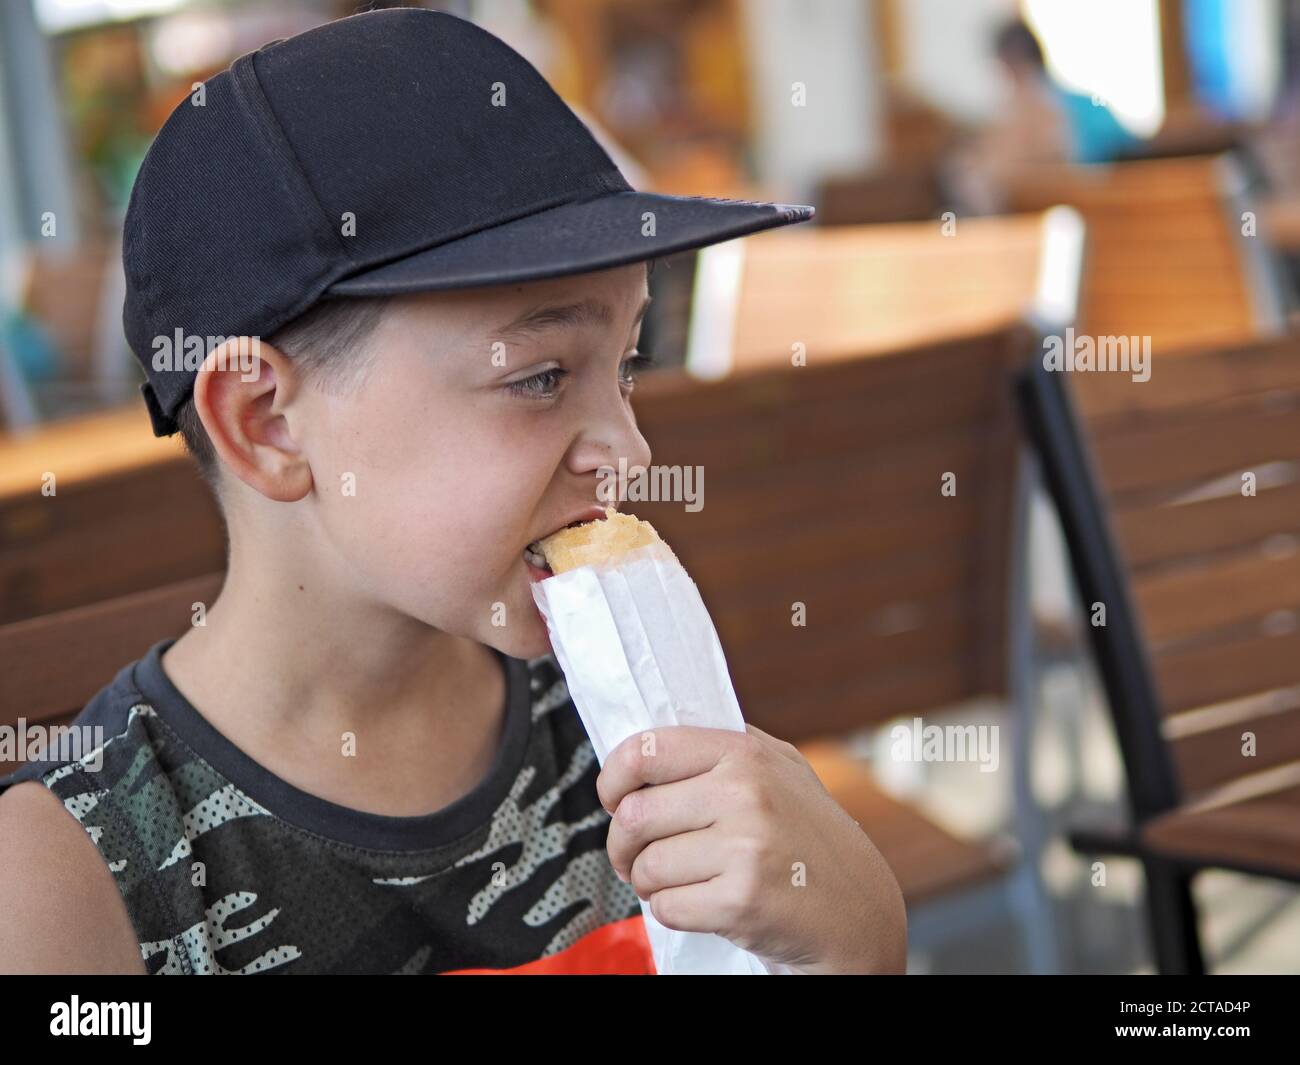 Young boy eats a hot dog at outdoor restaurant Stock Photo